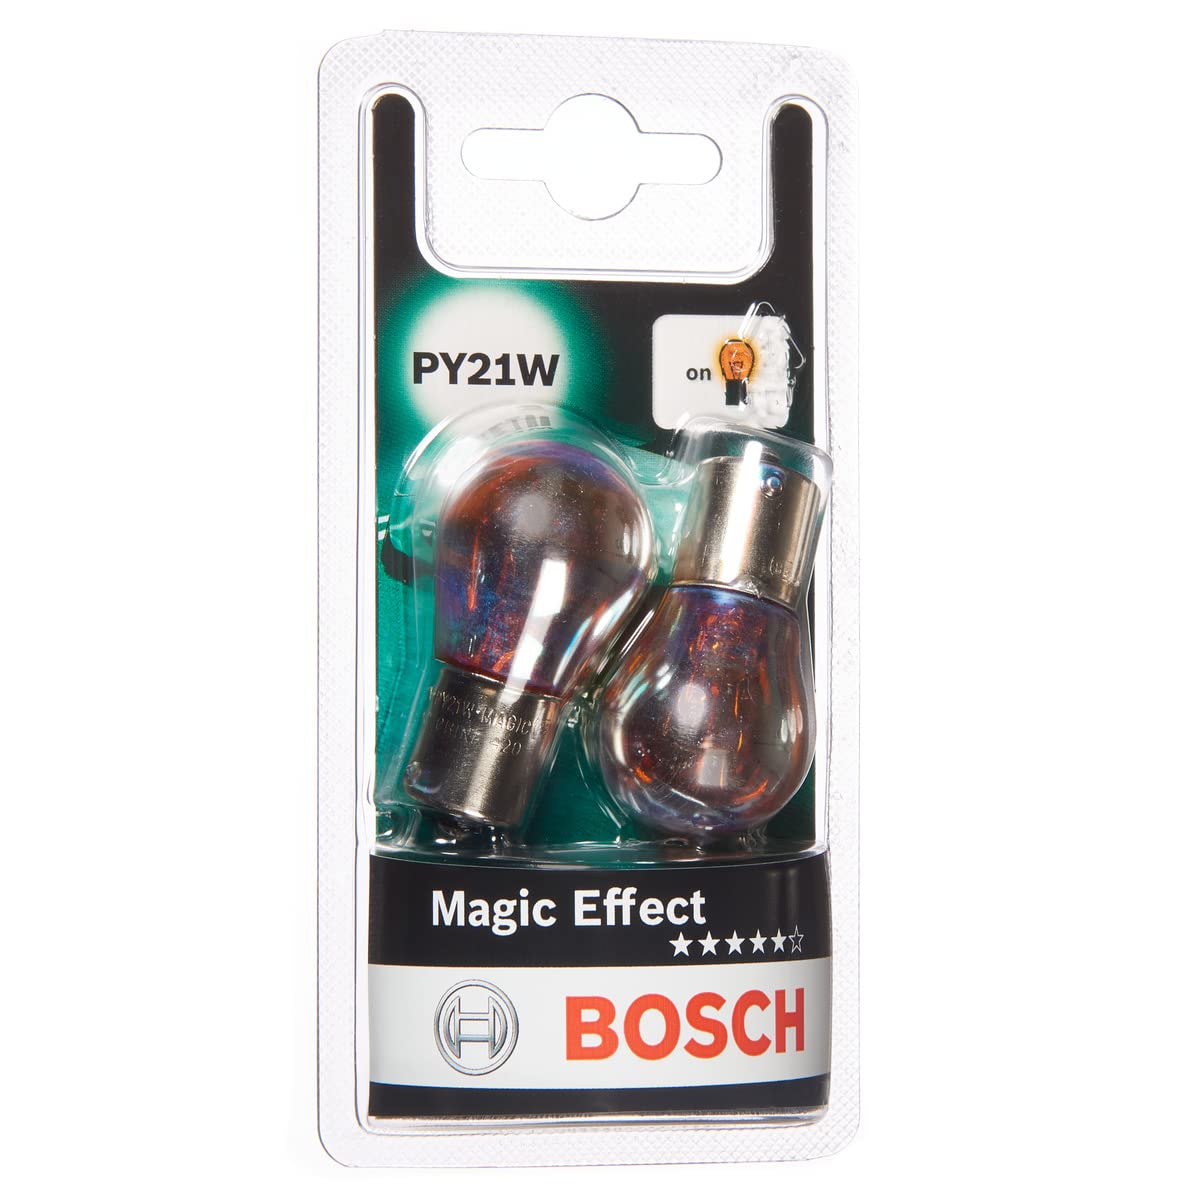 Bosch PY21W Magic Effect Fahrzeuglampen - 12 V 21 W BAU15s - 2 Stücke von Bosch Automotive